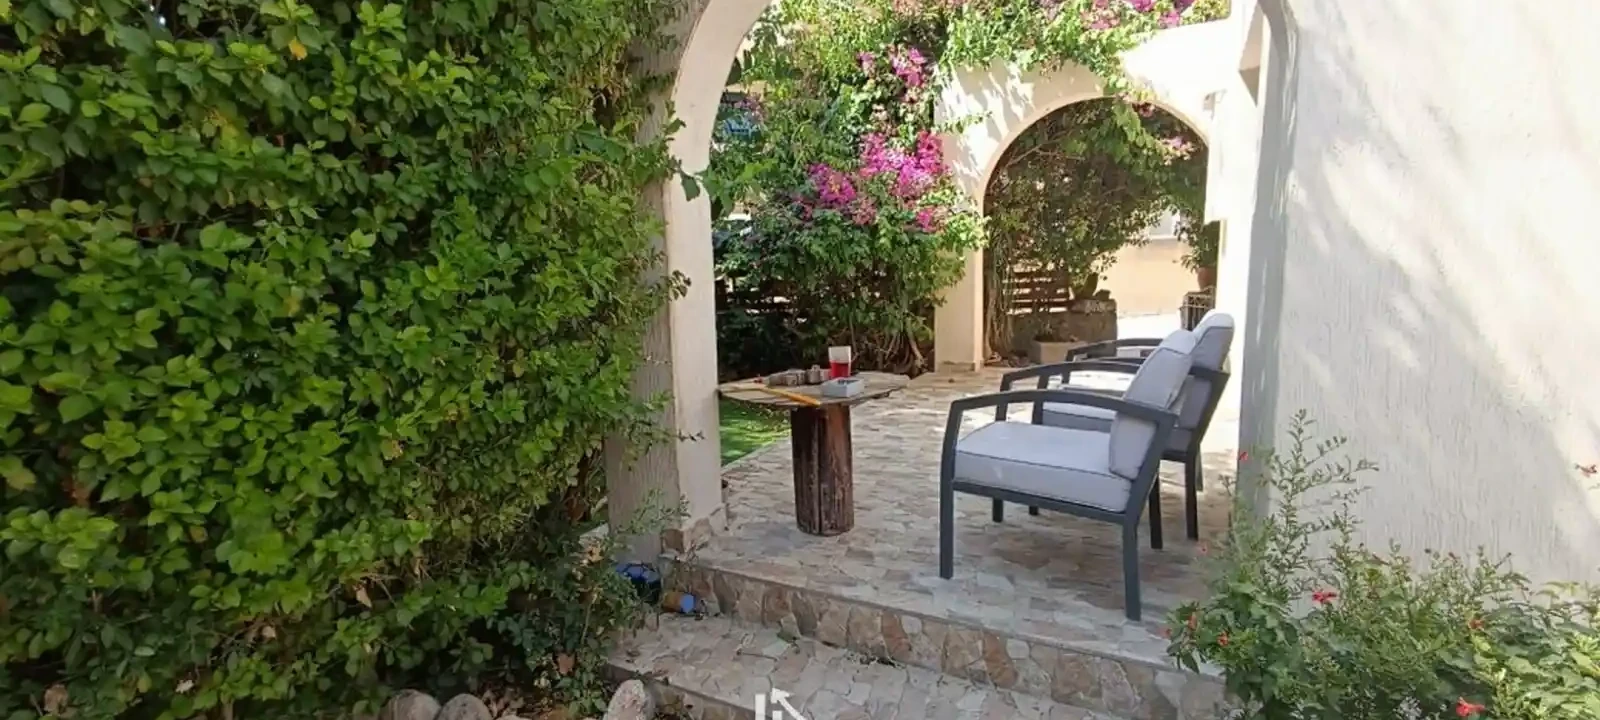 3-bedroom villa fоr sаle €270.000, image 1